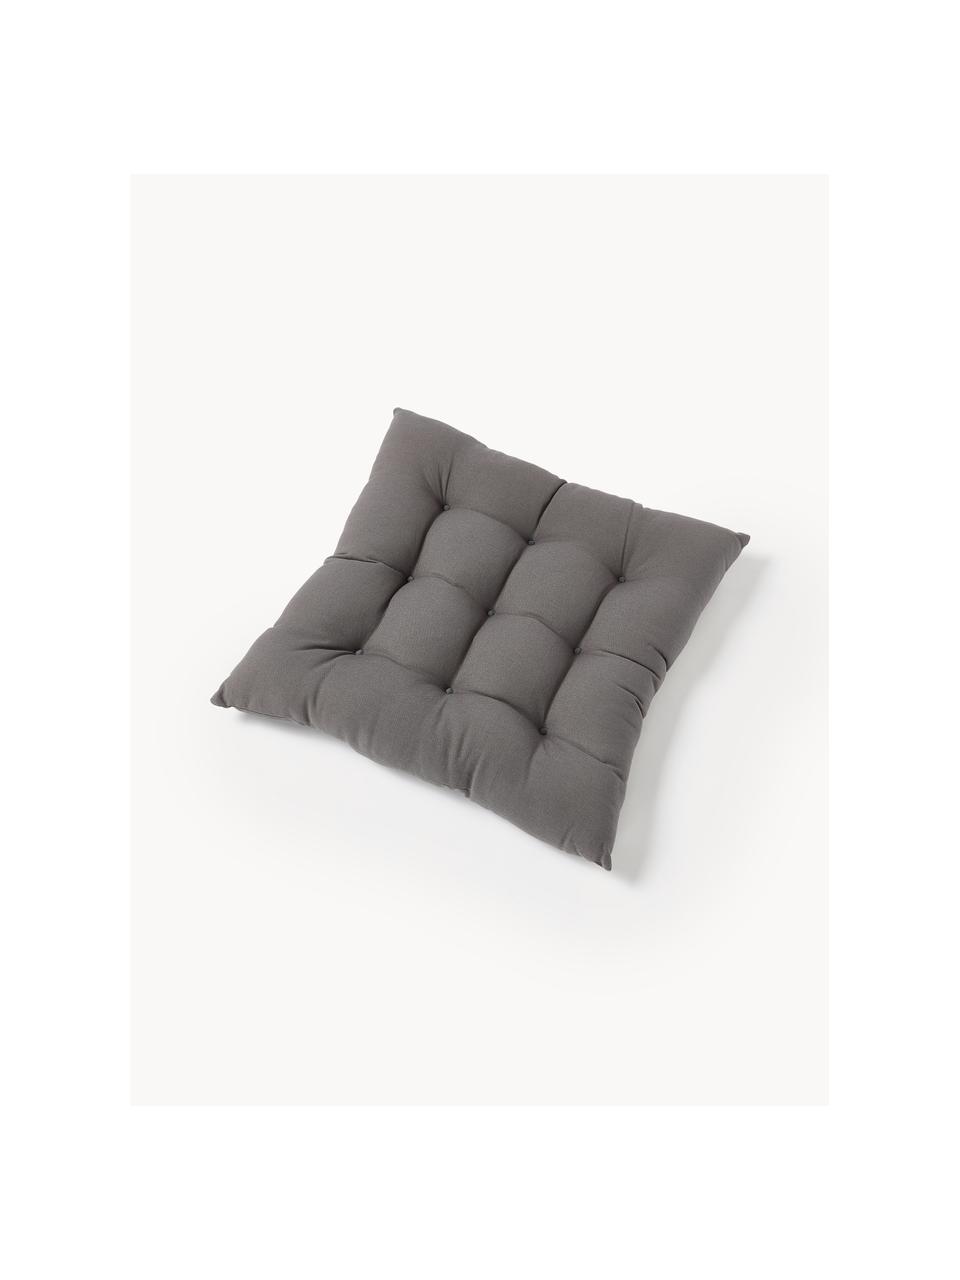 Cojines de asiento Ava, 2 uds., Funda: 100% algodón, Gris oscuro, An 40 x L 40 cm